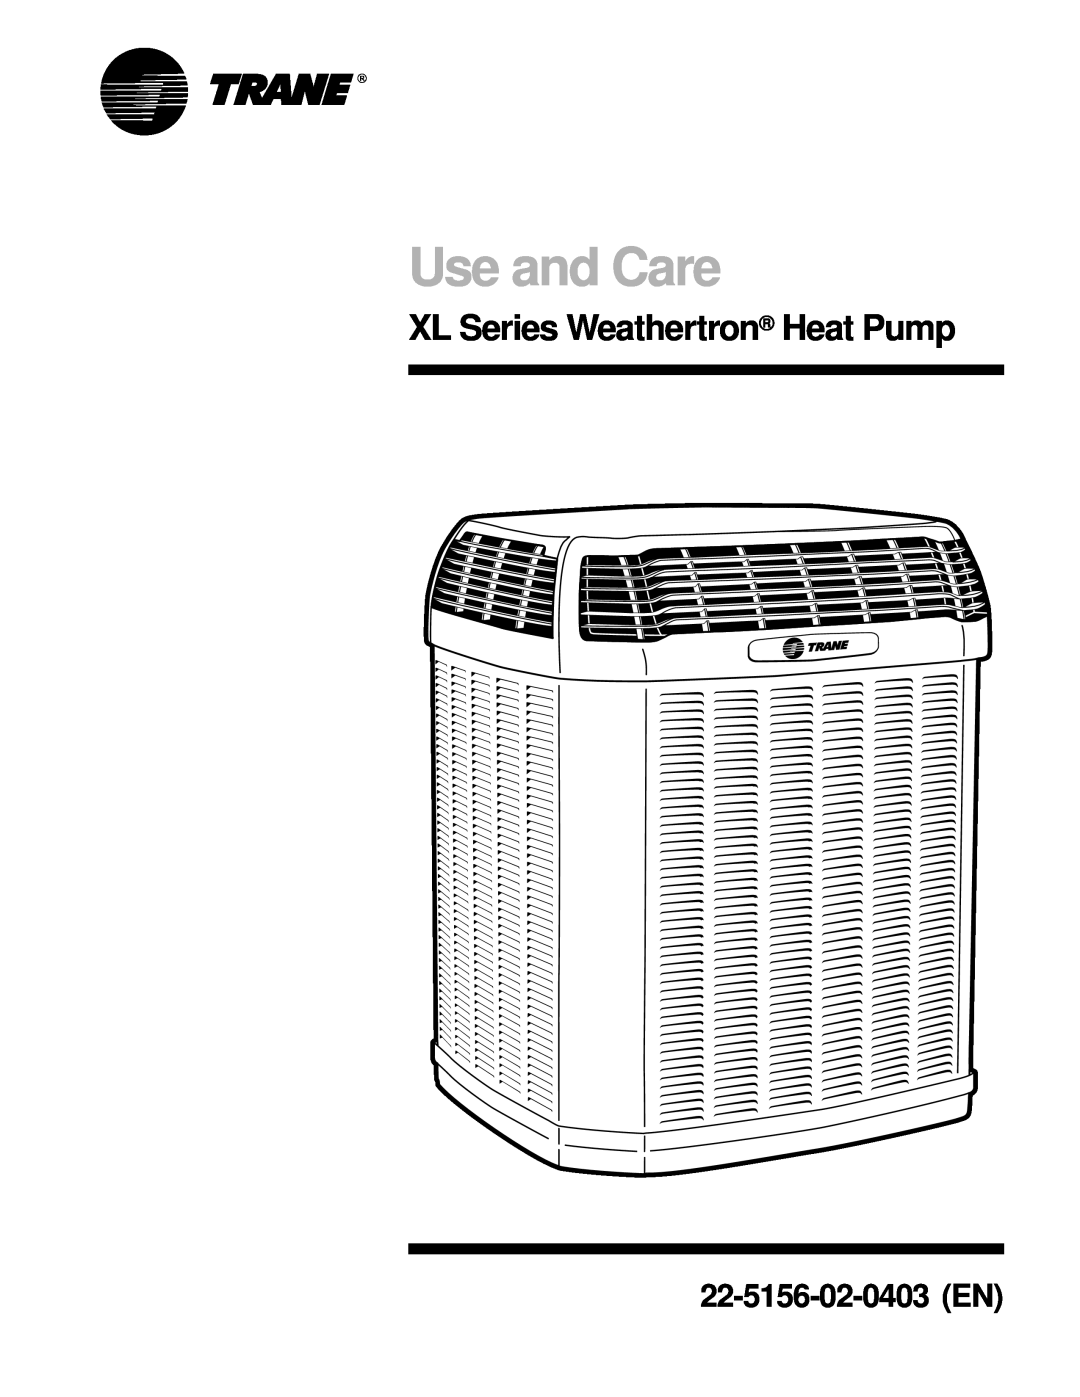 Trane manual XL Series Weathertron Heat Pump, Use and Care, 22-5156-02-0403EN 